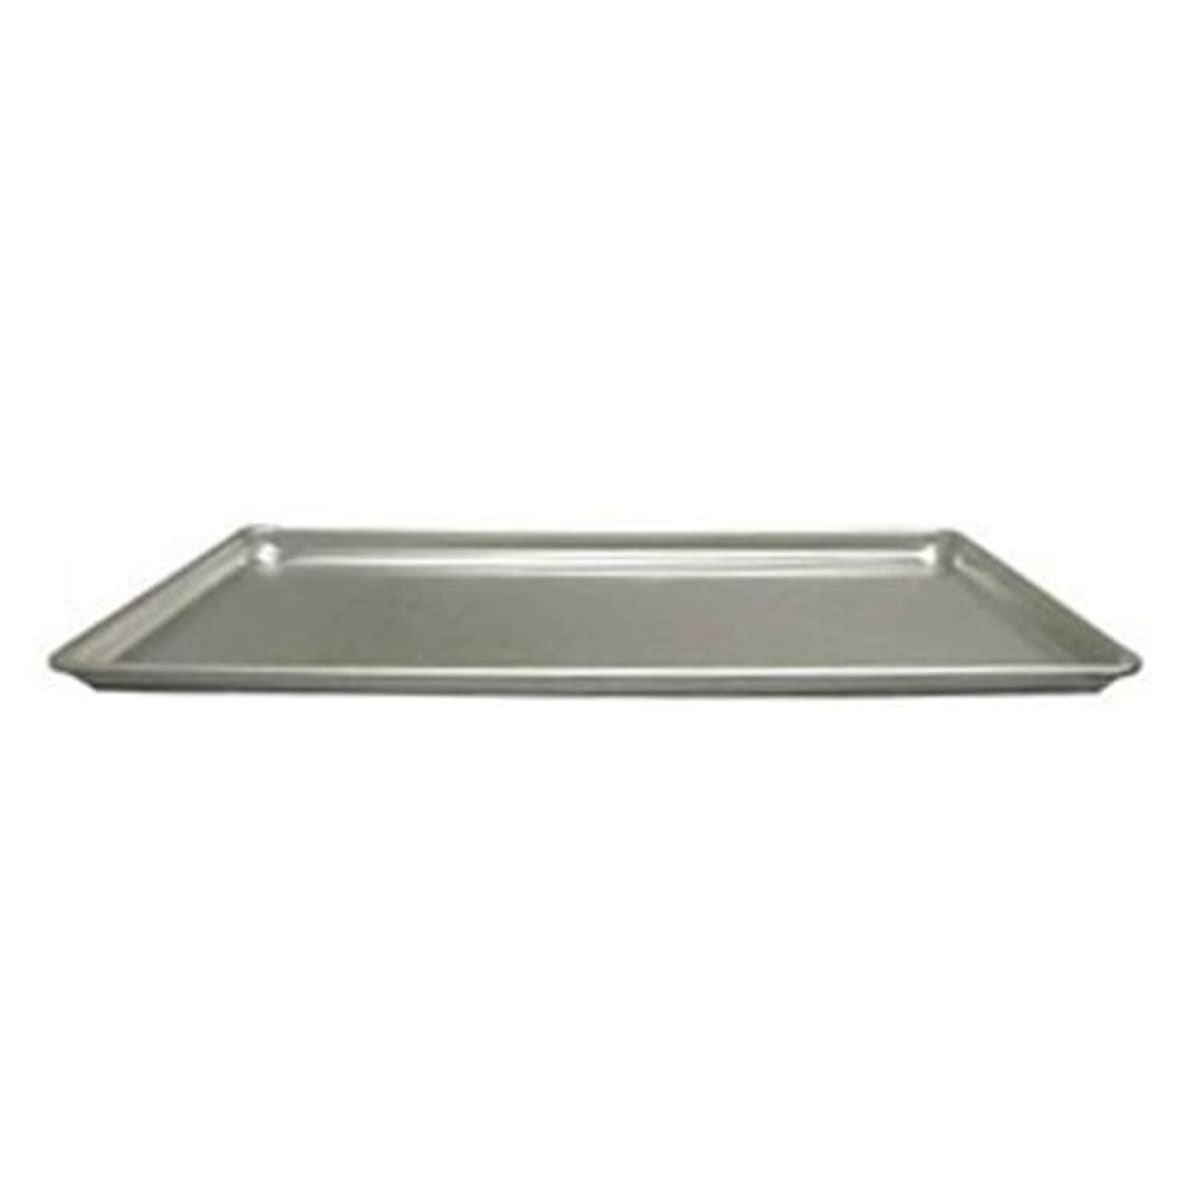  WINCO Aluminum Sheet Pan, 1, Silver : Home & Kitchen